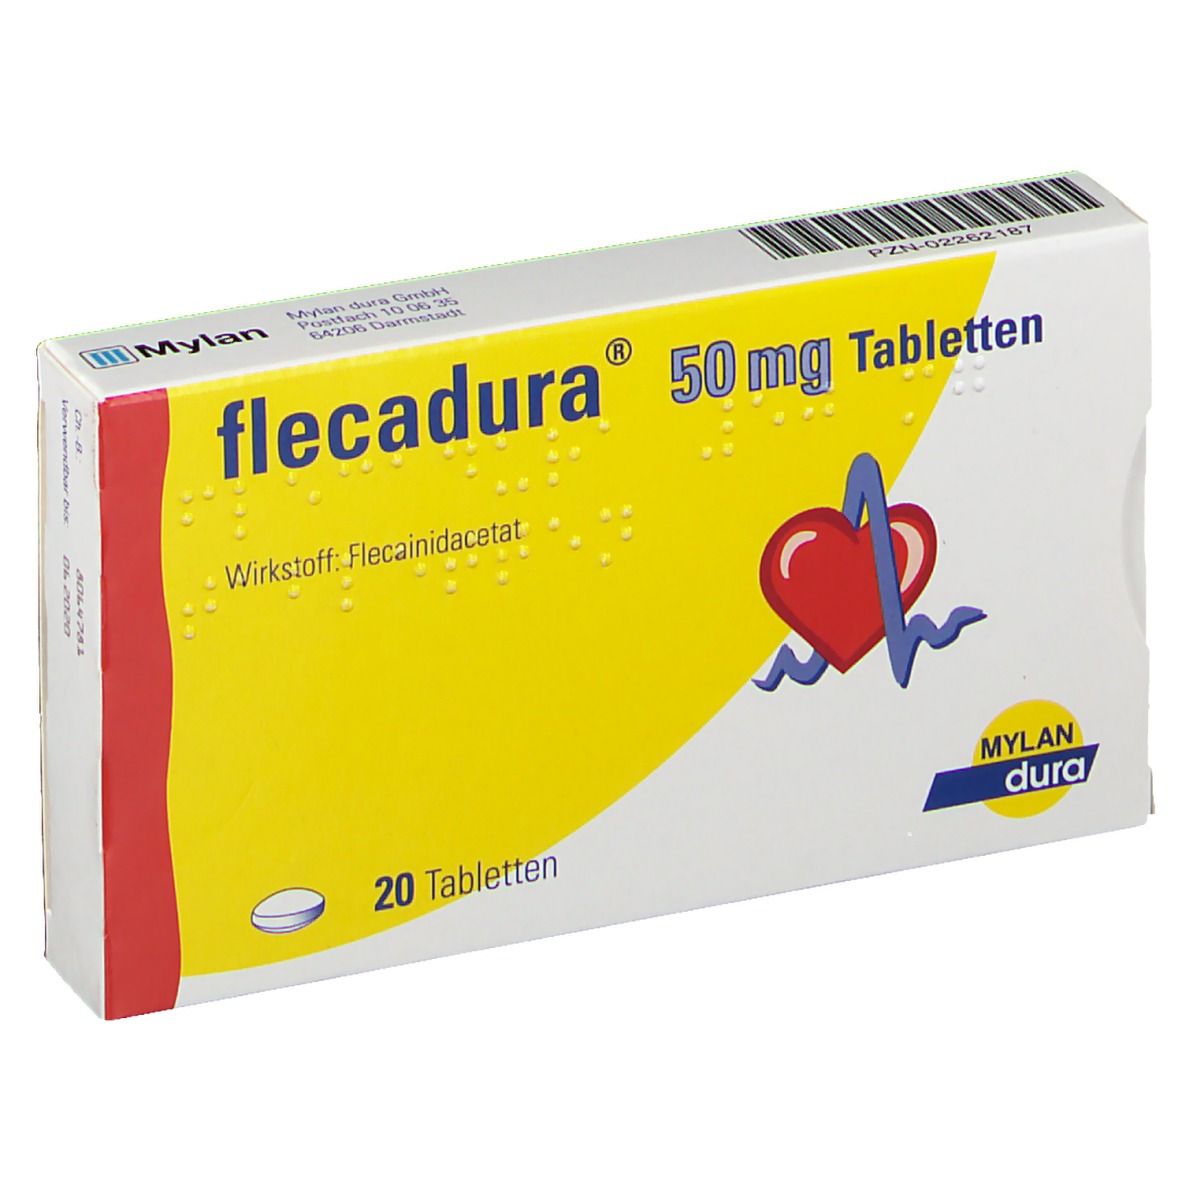 flecadura® 50 mg